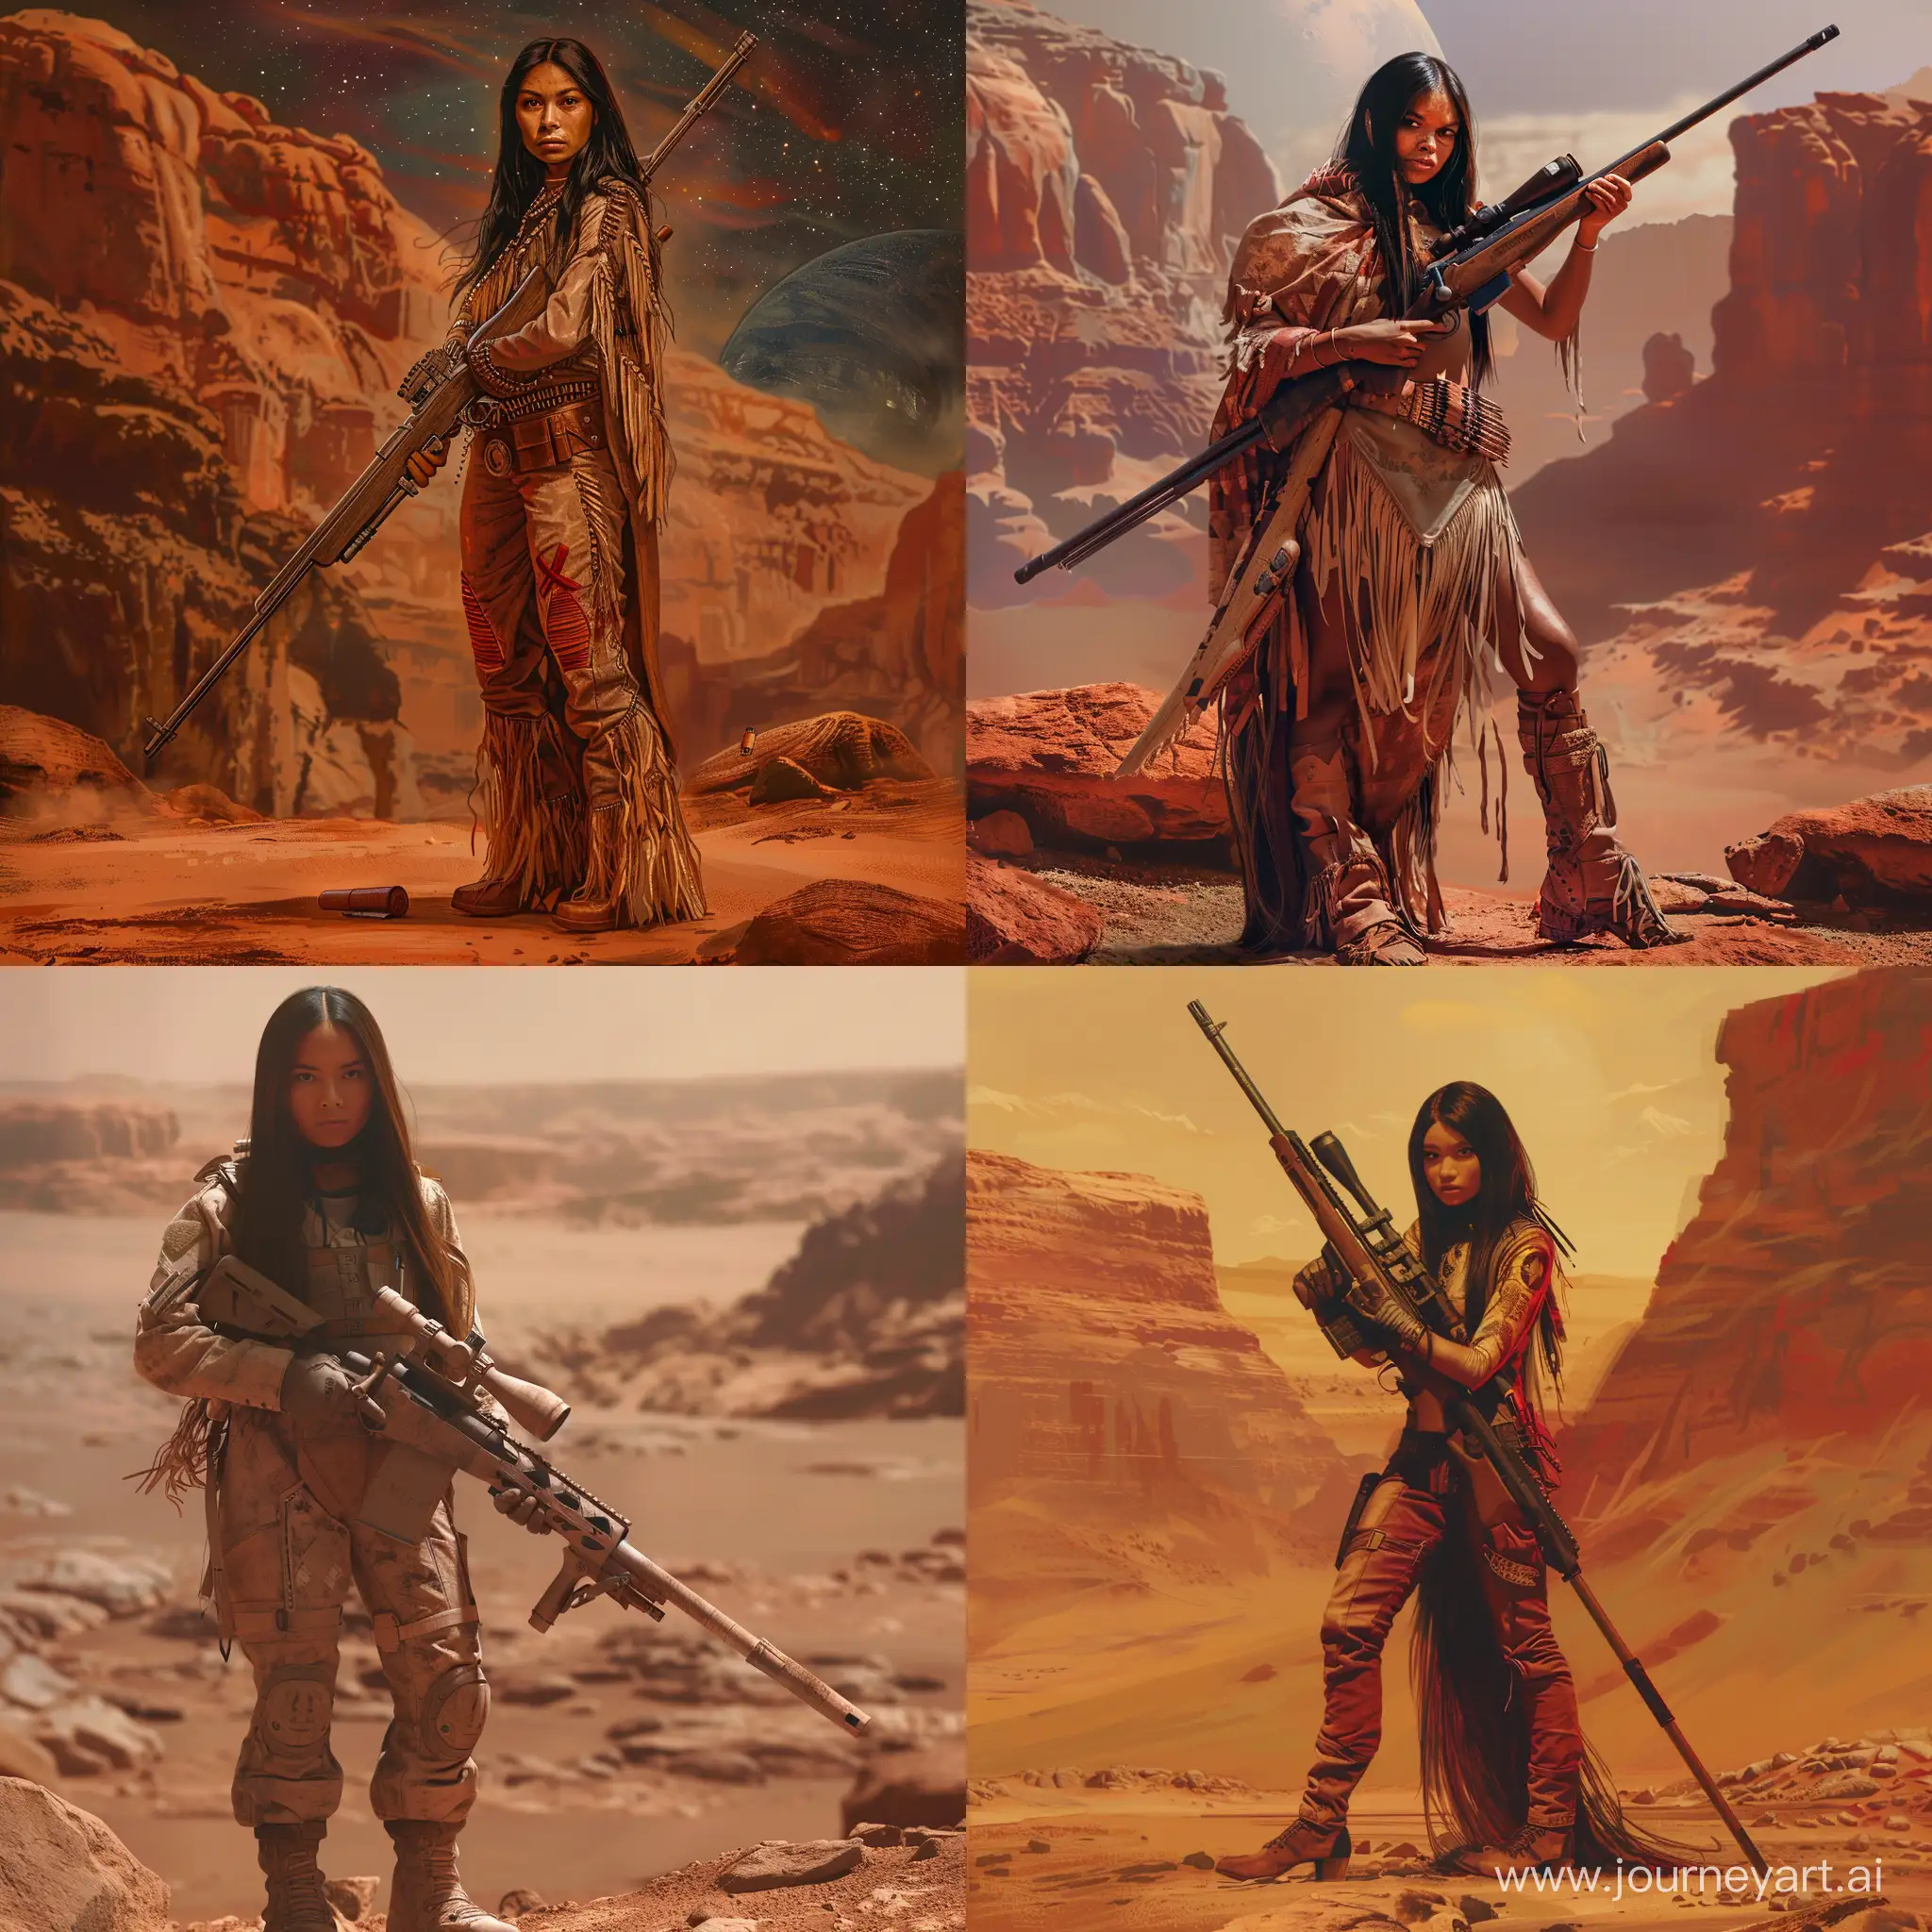 Gentle-American-Indian-Girl-on-Mars-with-Rifle